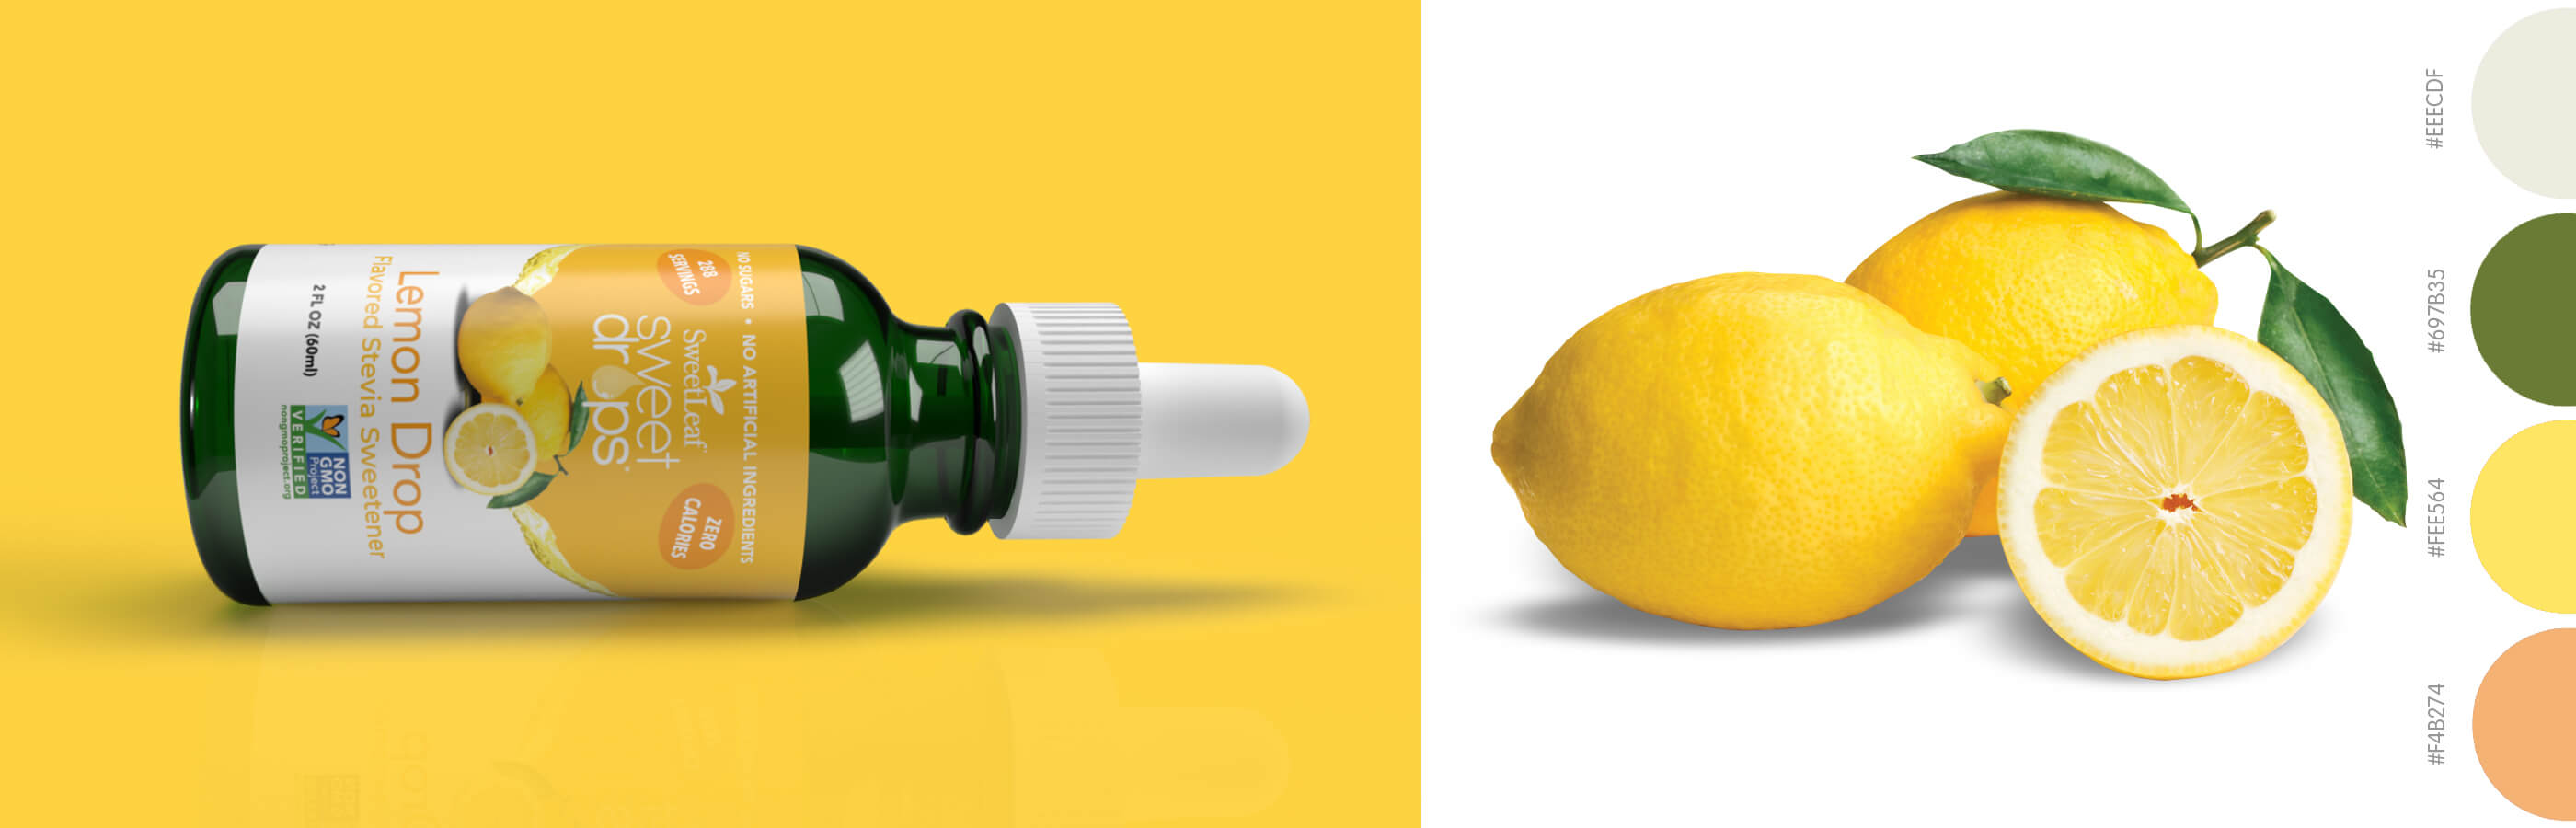 sweet drops lemon package design image